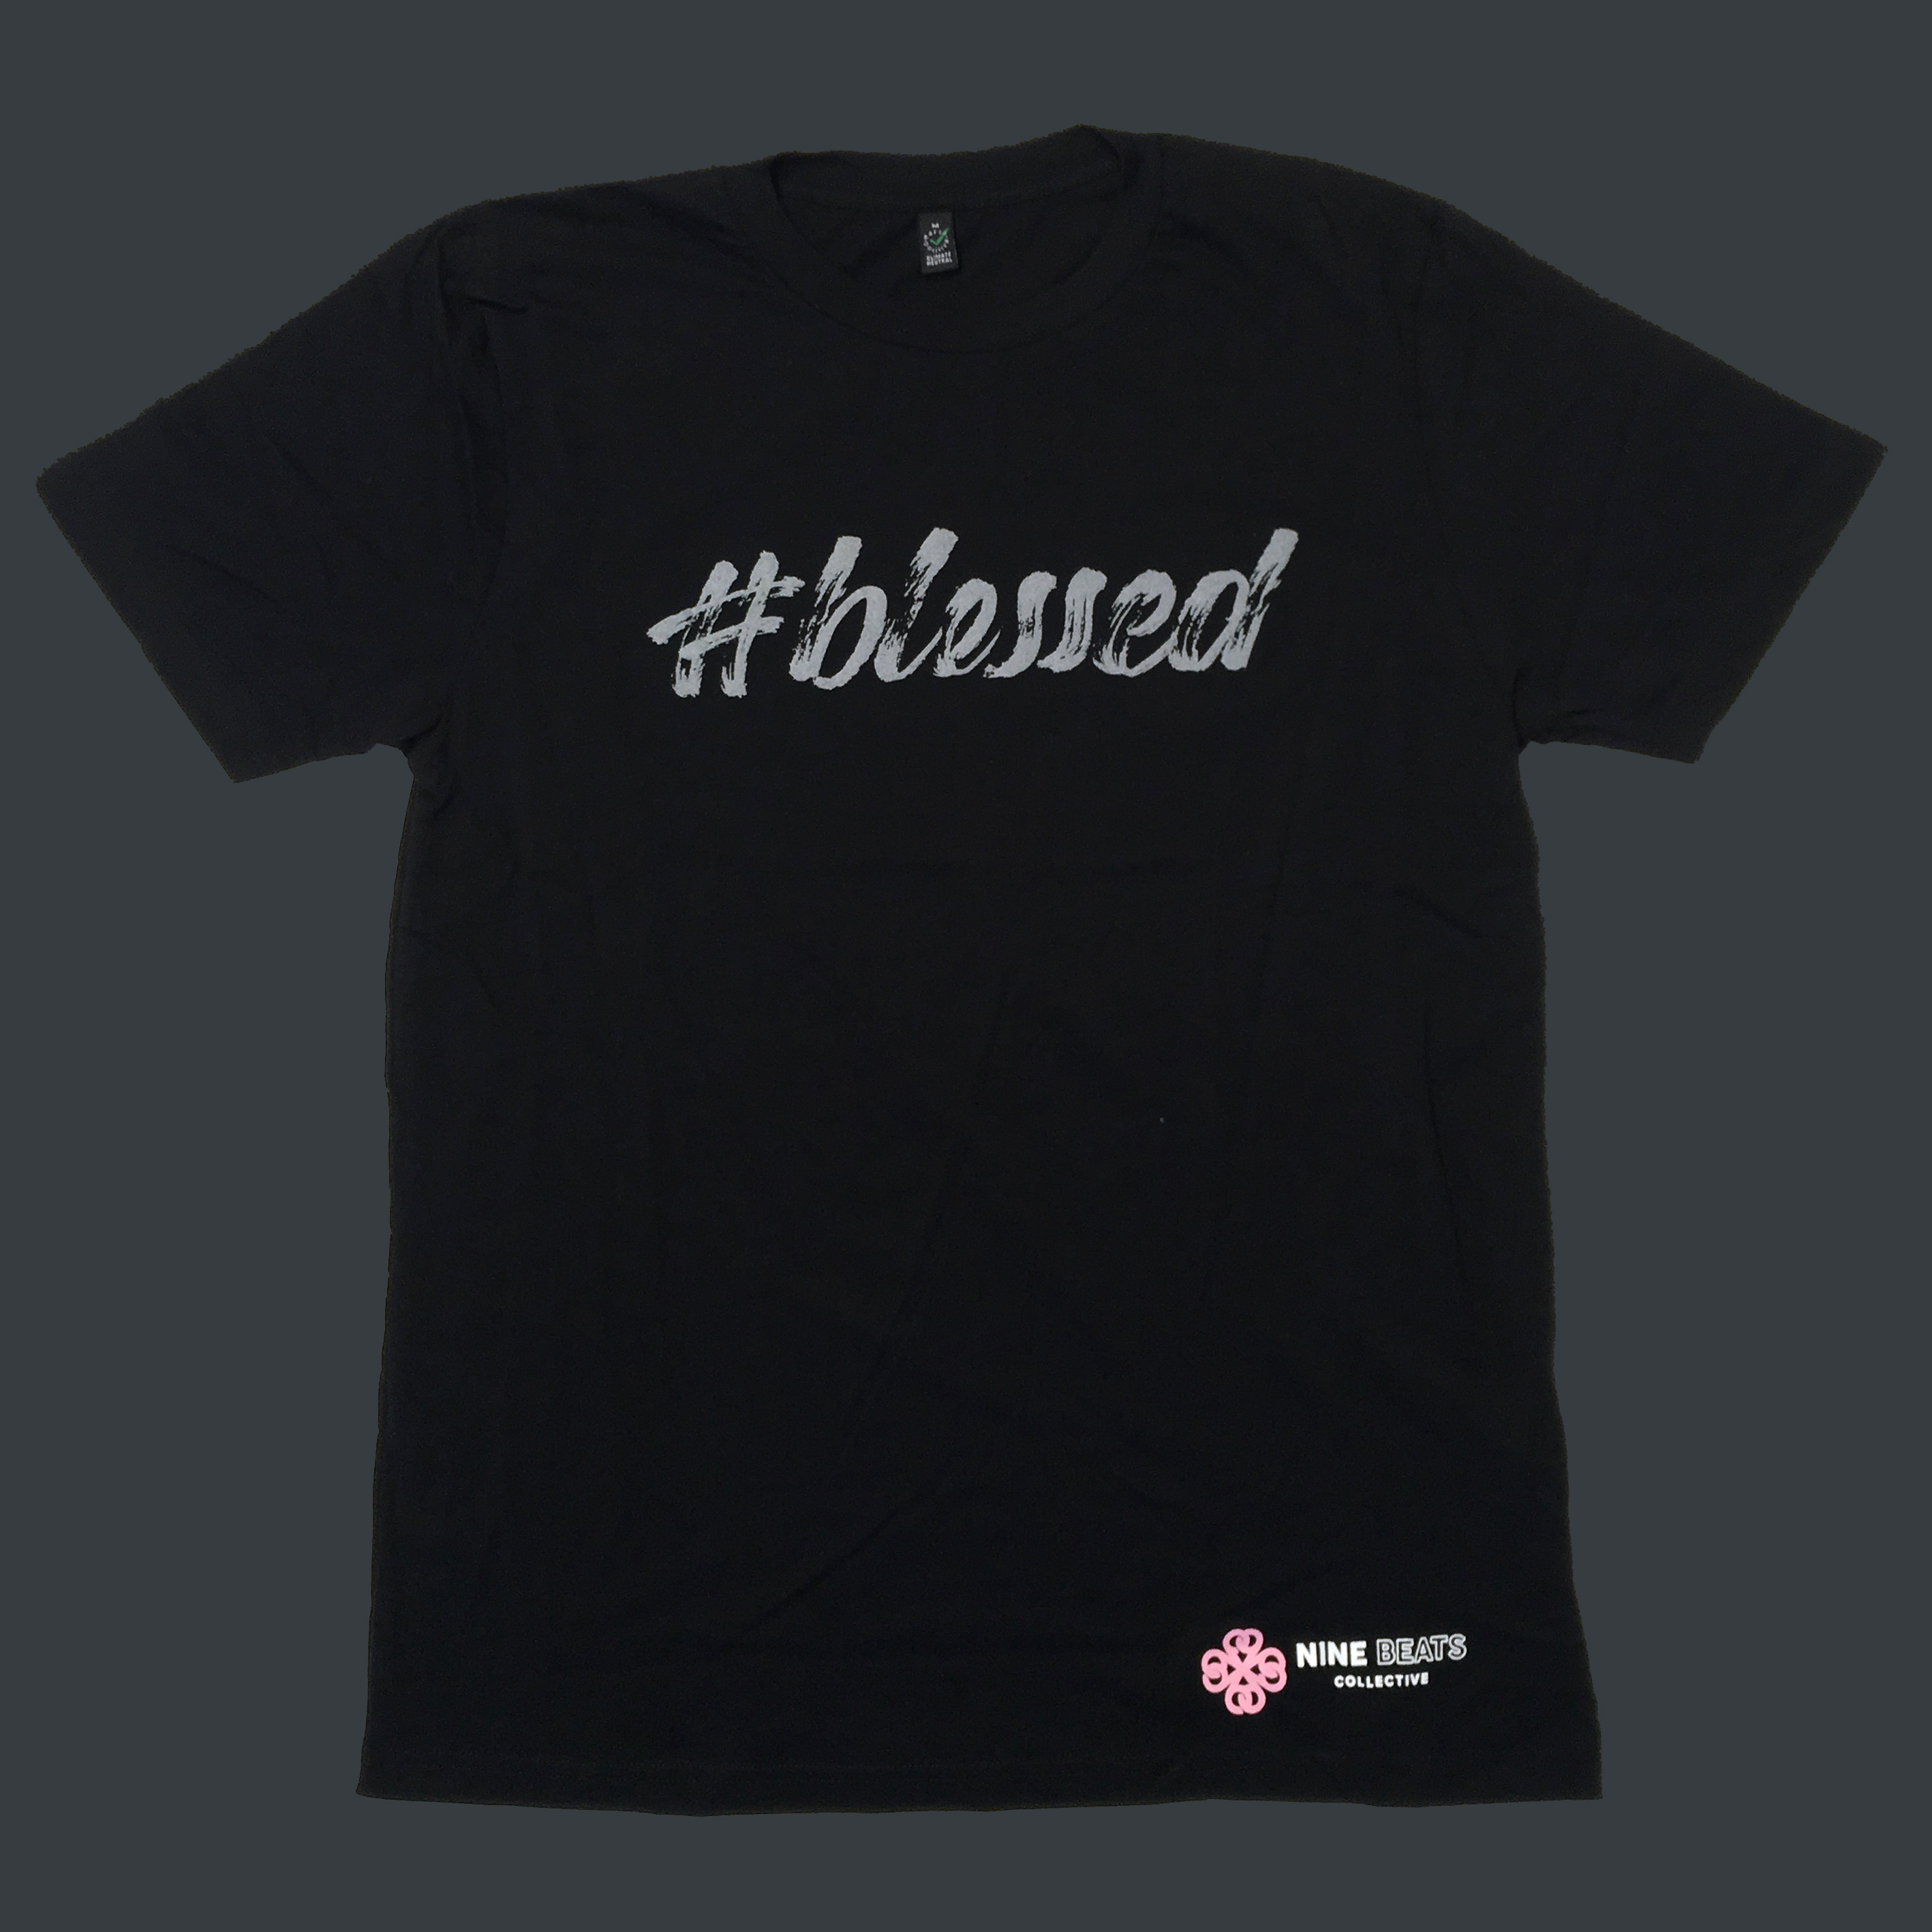 Slået lastbil Exert Savant Organic, #Blessed on black t-shirt (unisex) | Nine Beats Collective